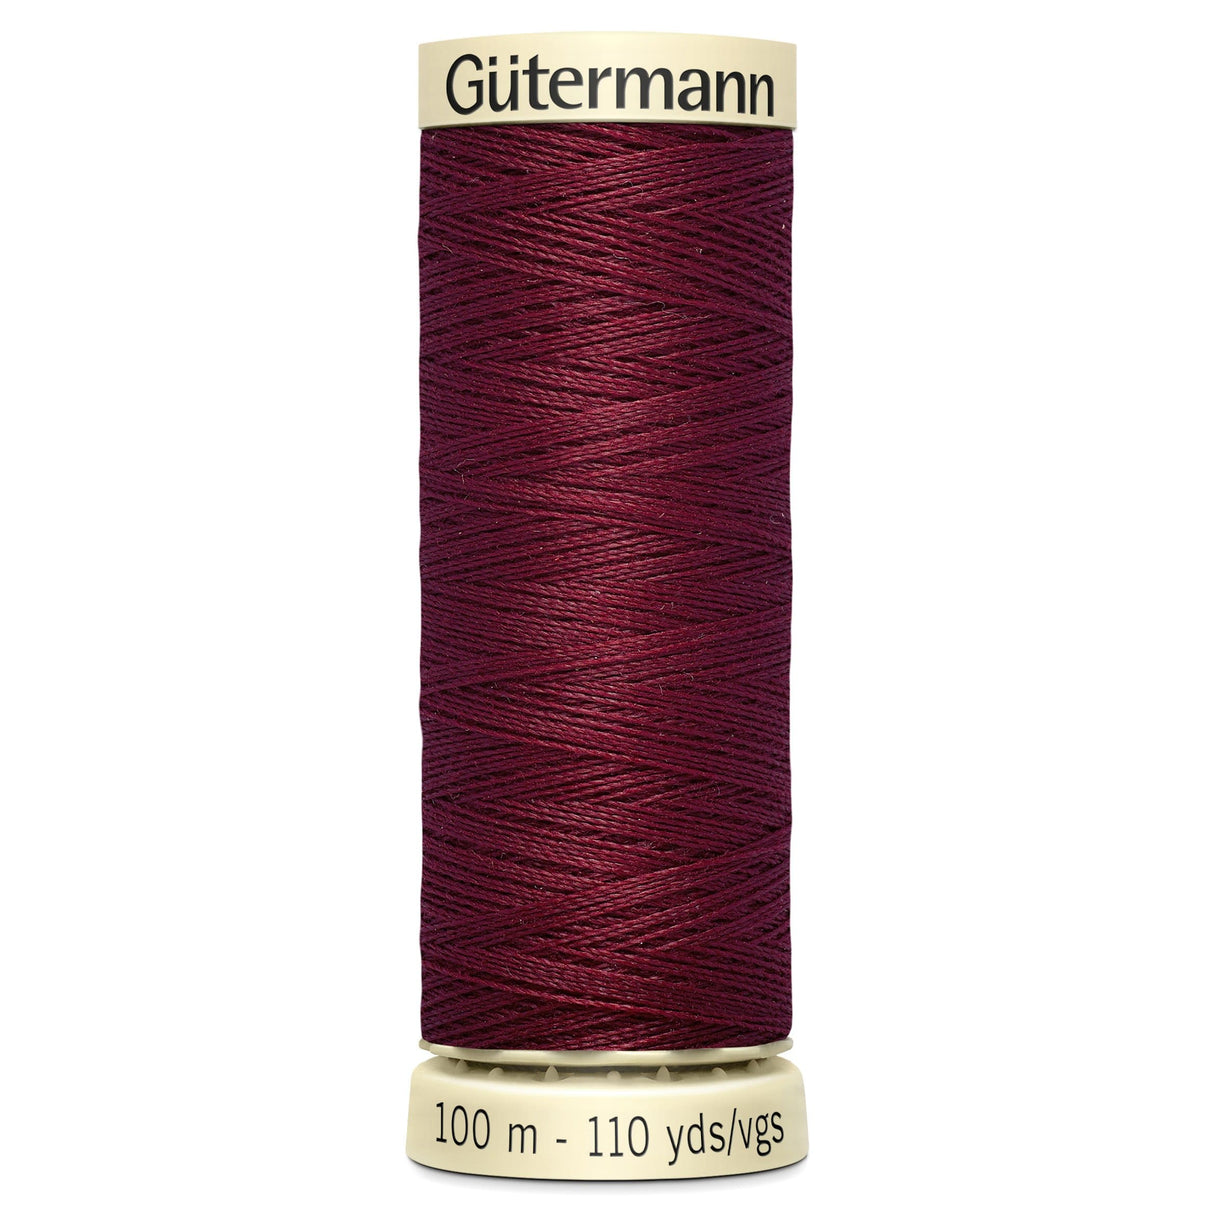 Groves Haberdashery 368 Gutermann Thread Sewing Cotton 100 m Black to Pink